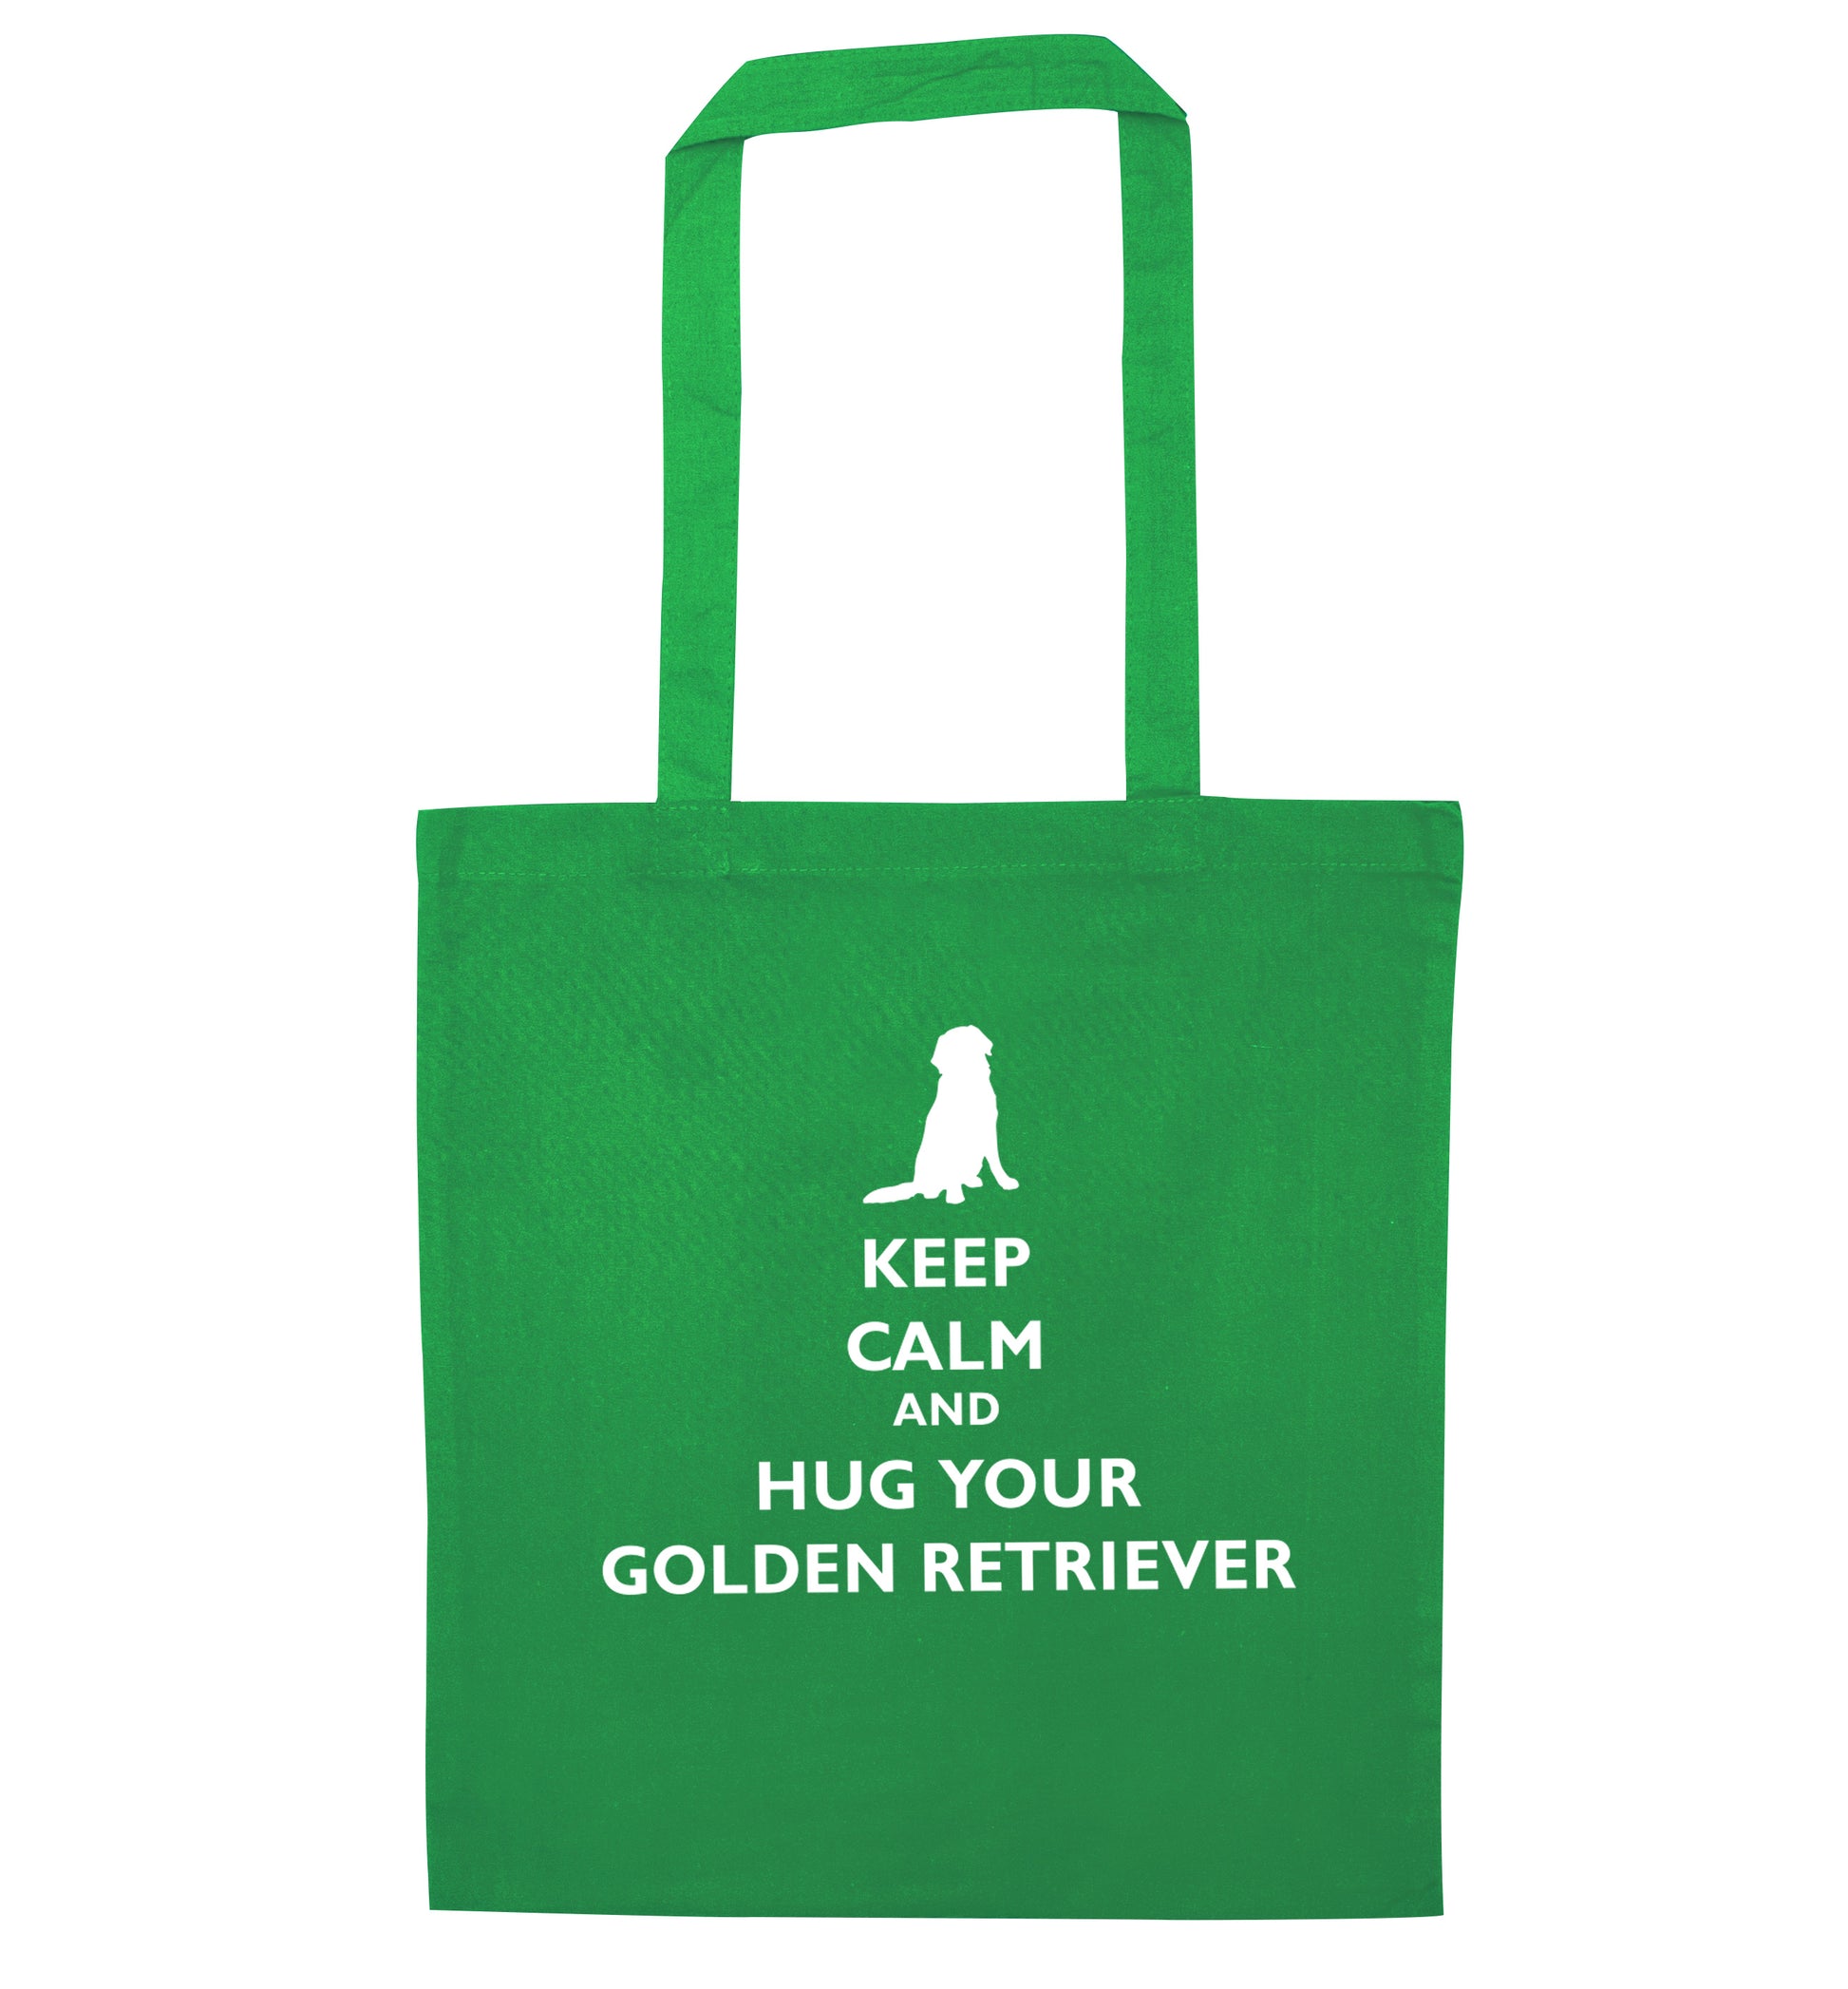 Keep calm and hug your golden retriever green tote bag